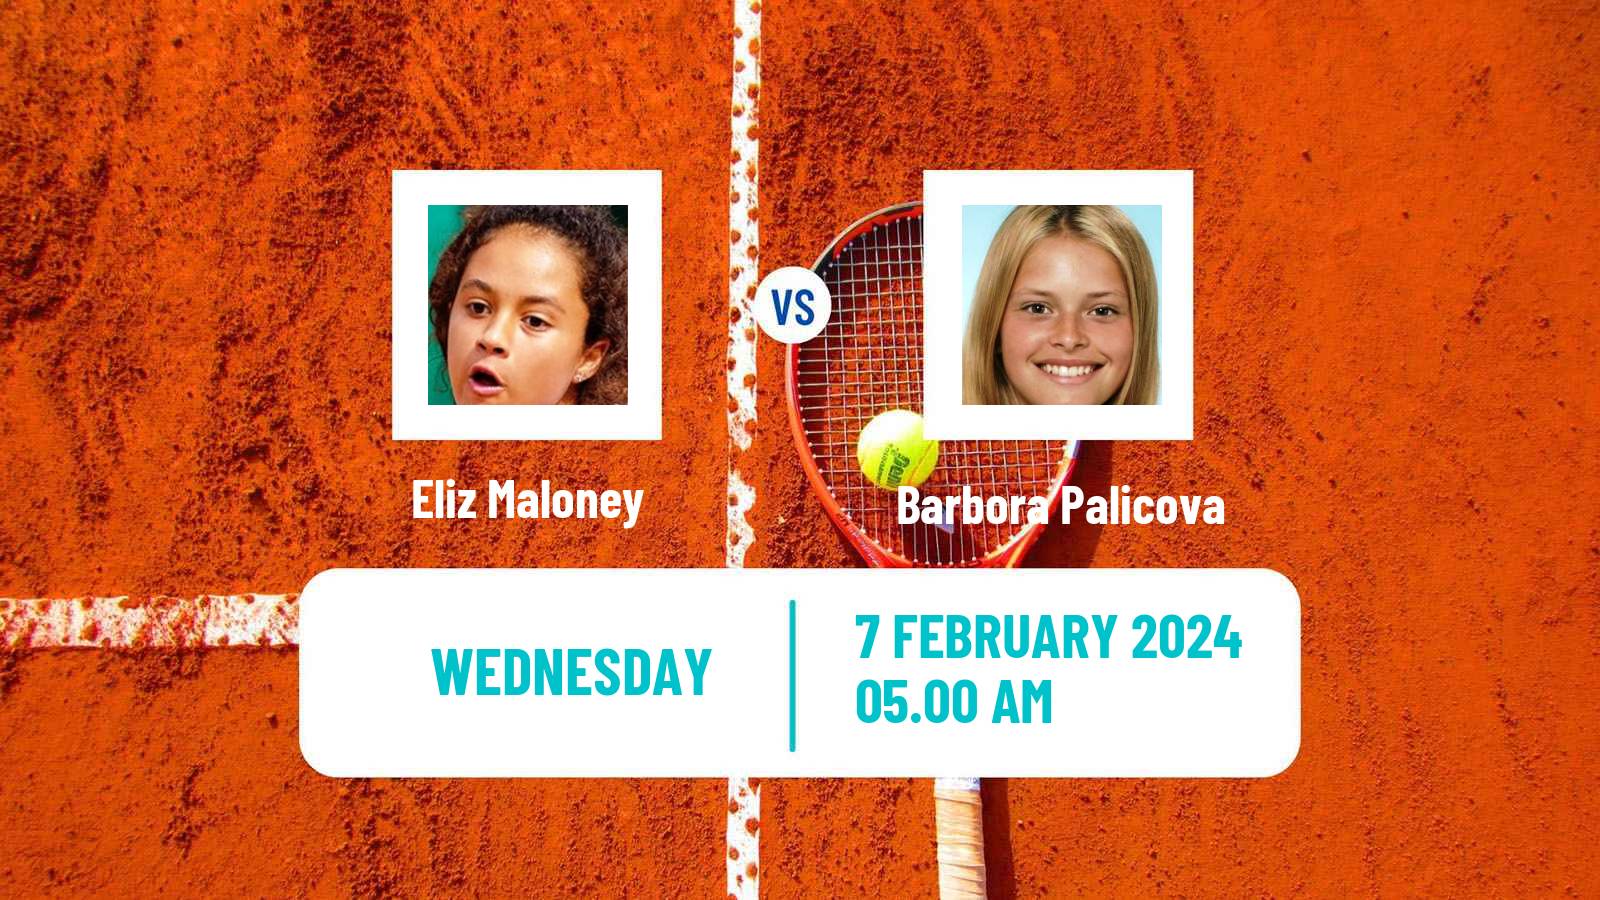 Tennis ITF W50 Edgbaston Women Eliz Maloney - Barbora Palicova